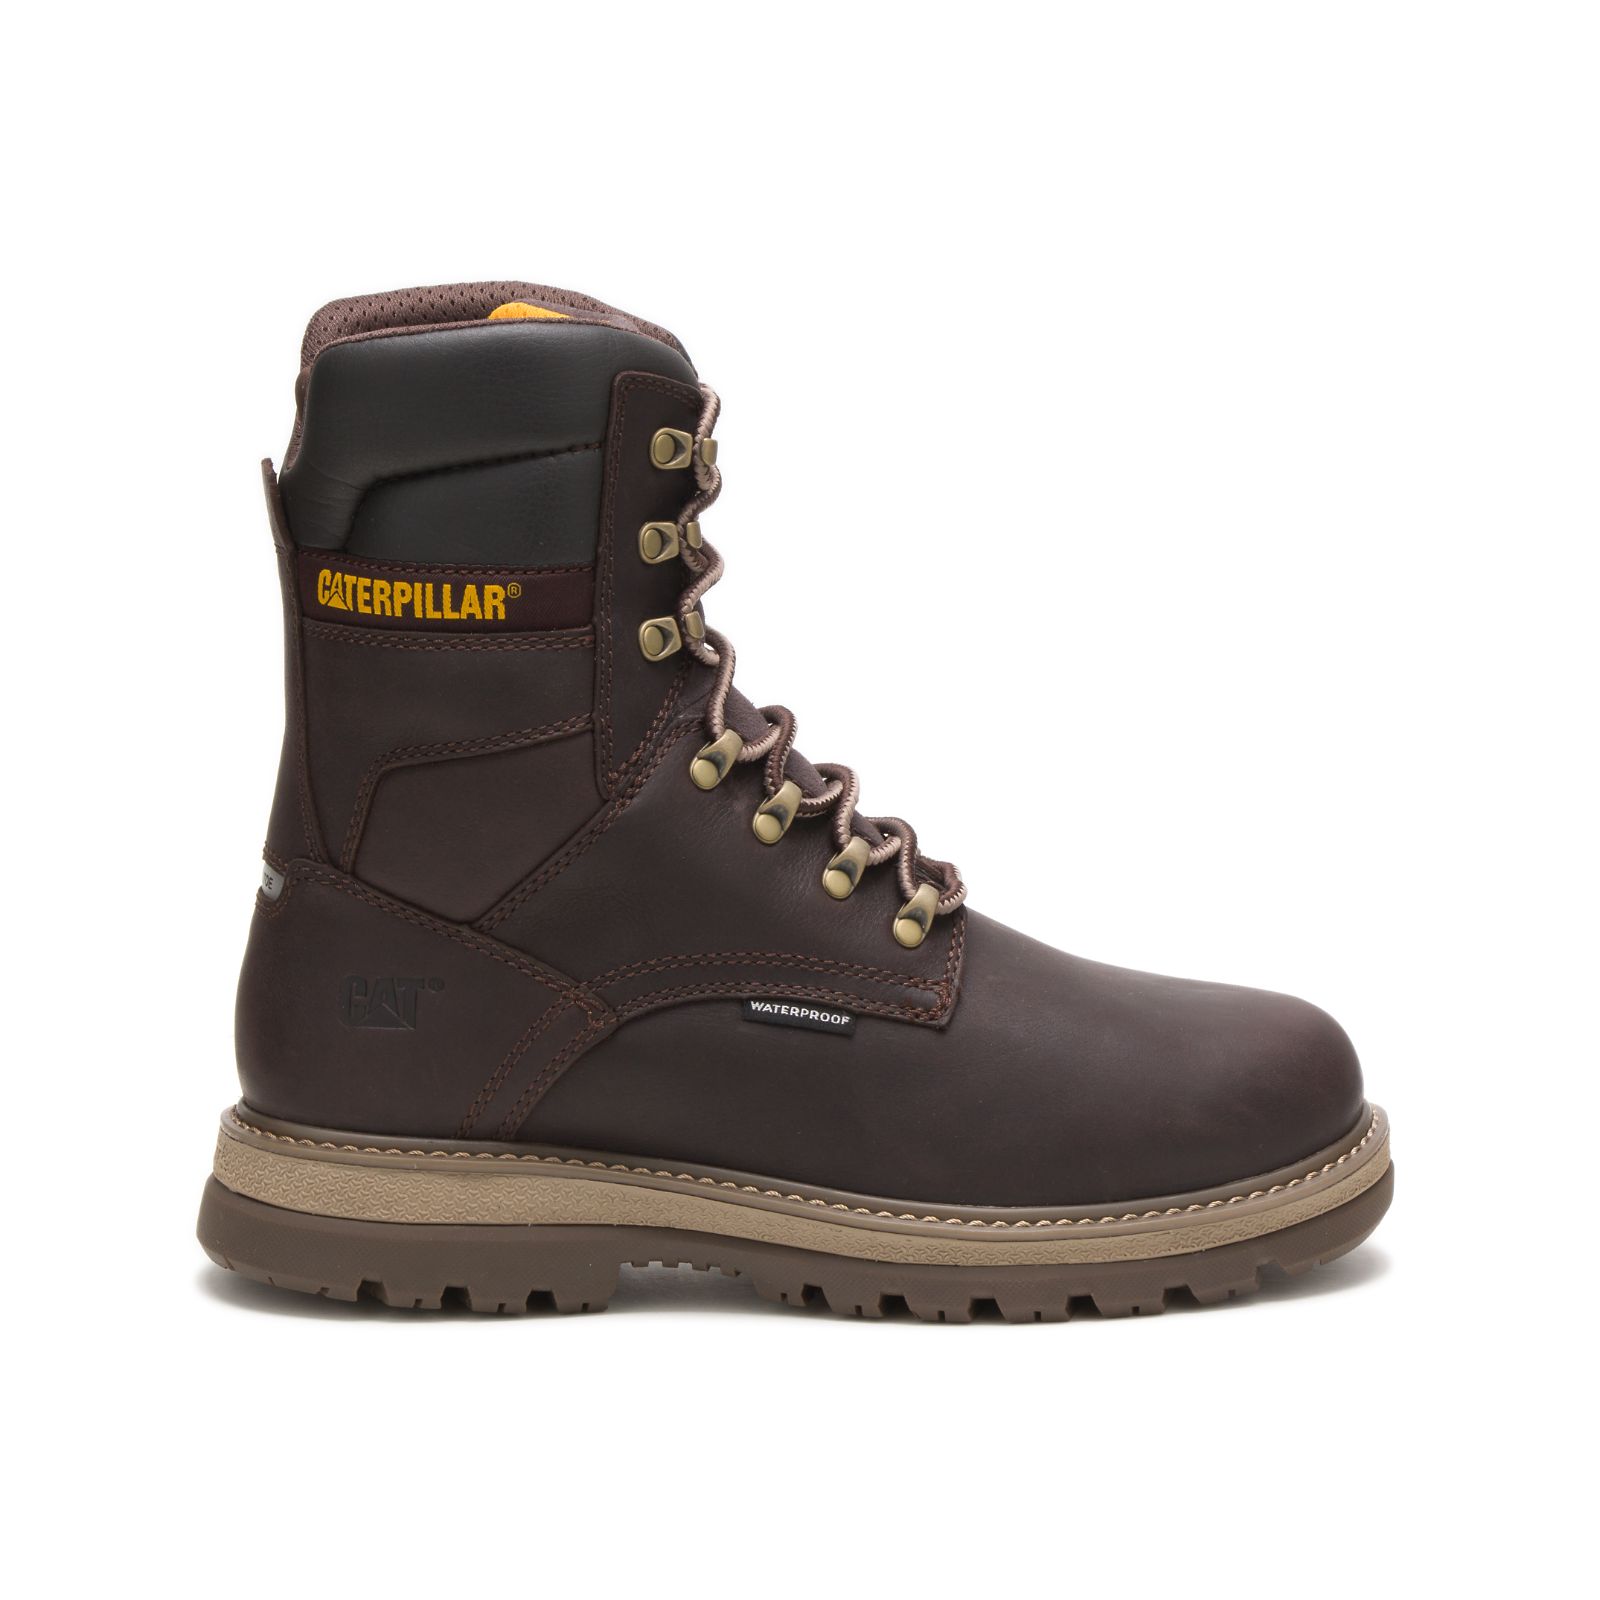 Caterpillar Fairbanks 8" Waterproof Tx Steel Toe - Mens Steel Toe Boots - Chocolate - NZ (861XGEHSD)